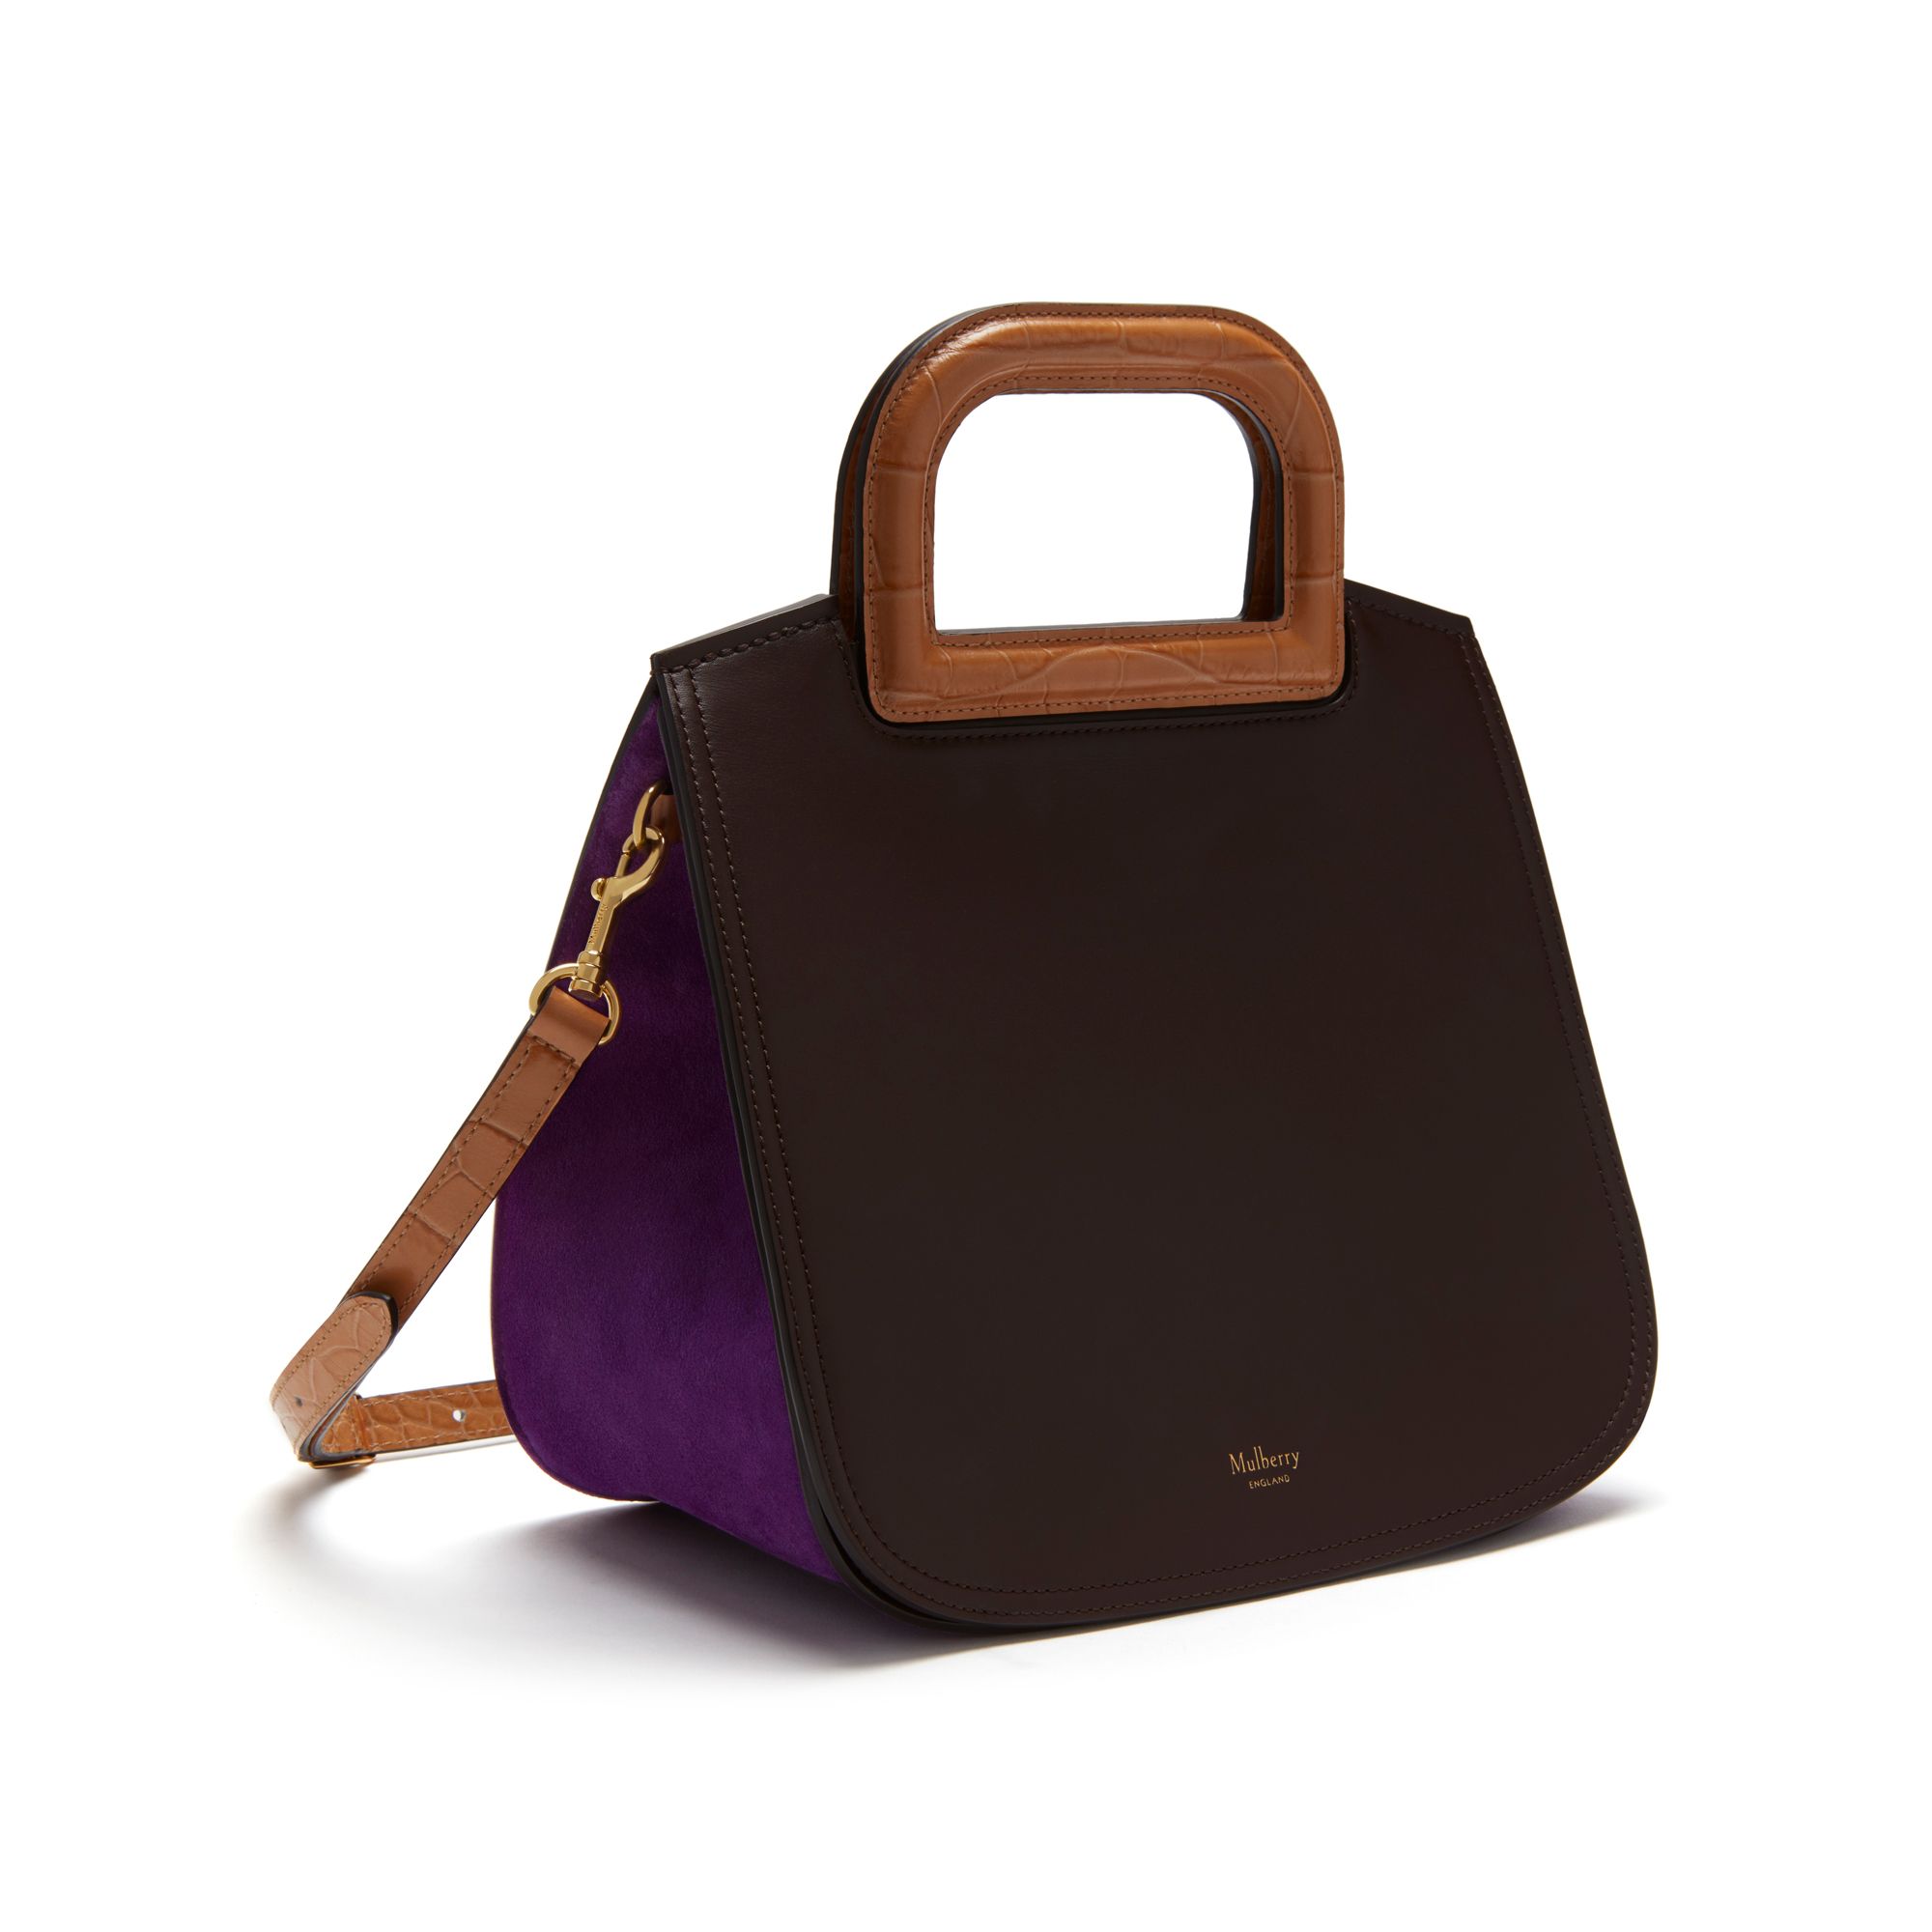 Mulberry bag | Handbags, Purses & Women's Bags for Sale | Gumtree